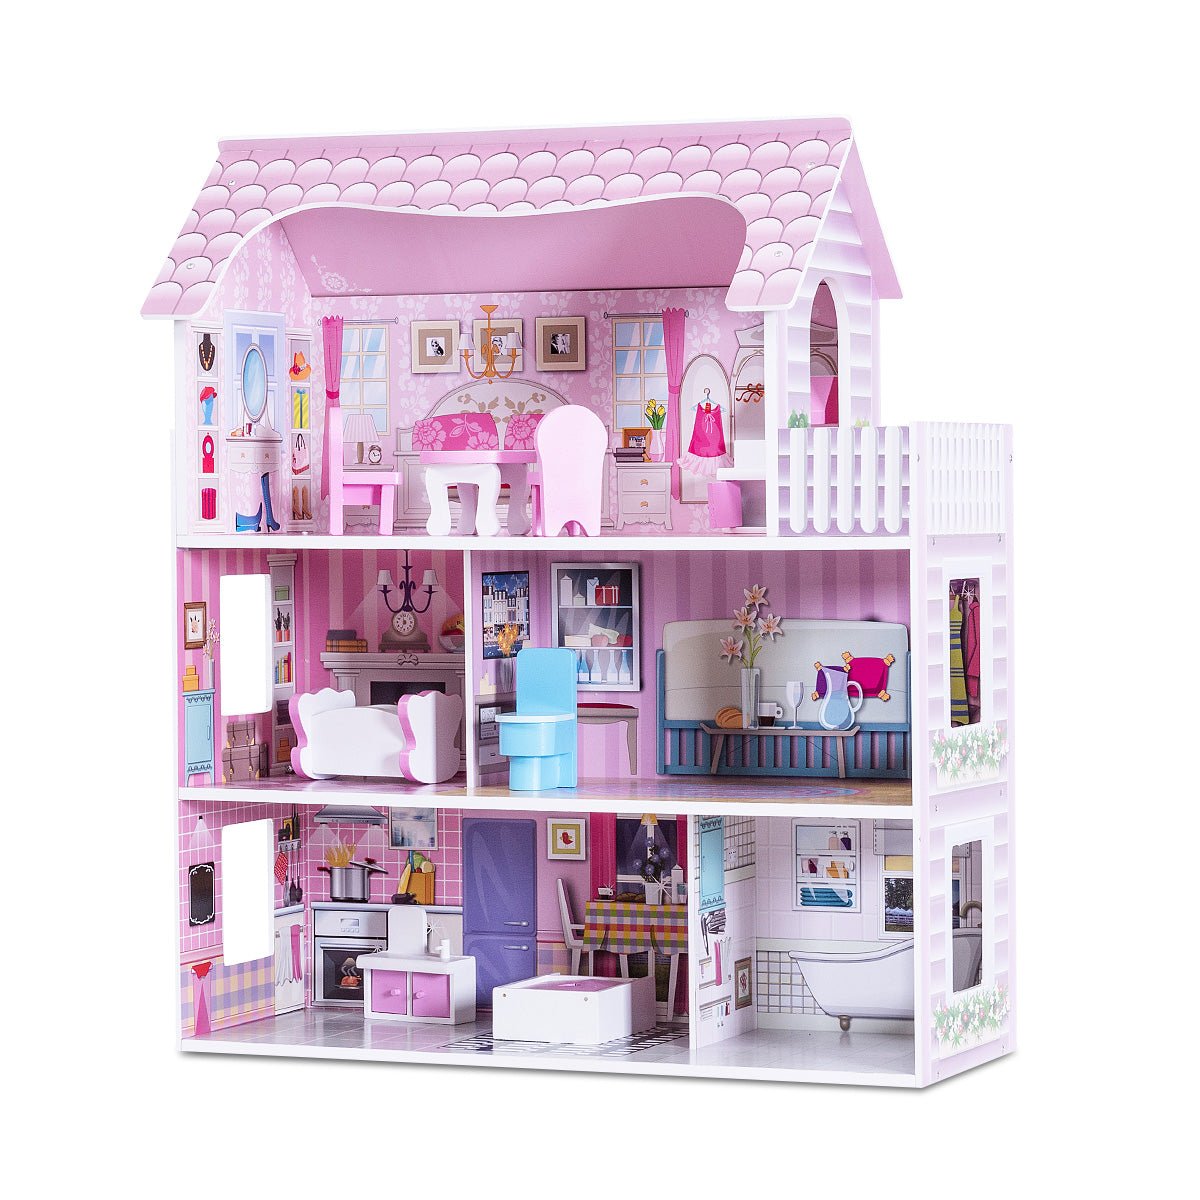 Spacious Wooden Dollhouse - Shop at Kids Mega Mart